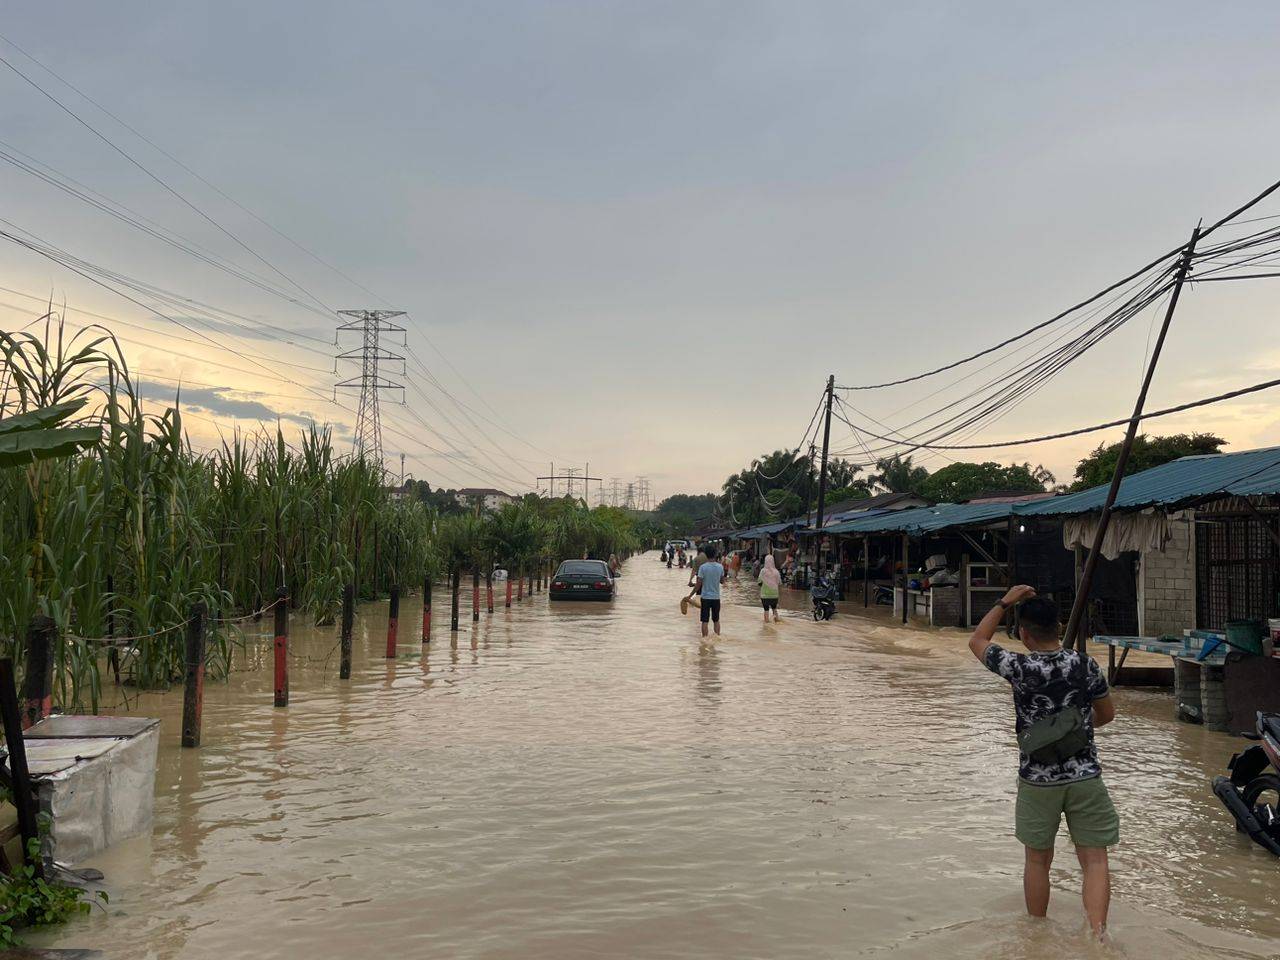 floods hit several areas in subang, sungai buloh